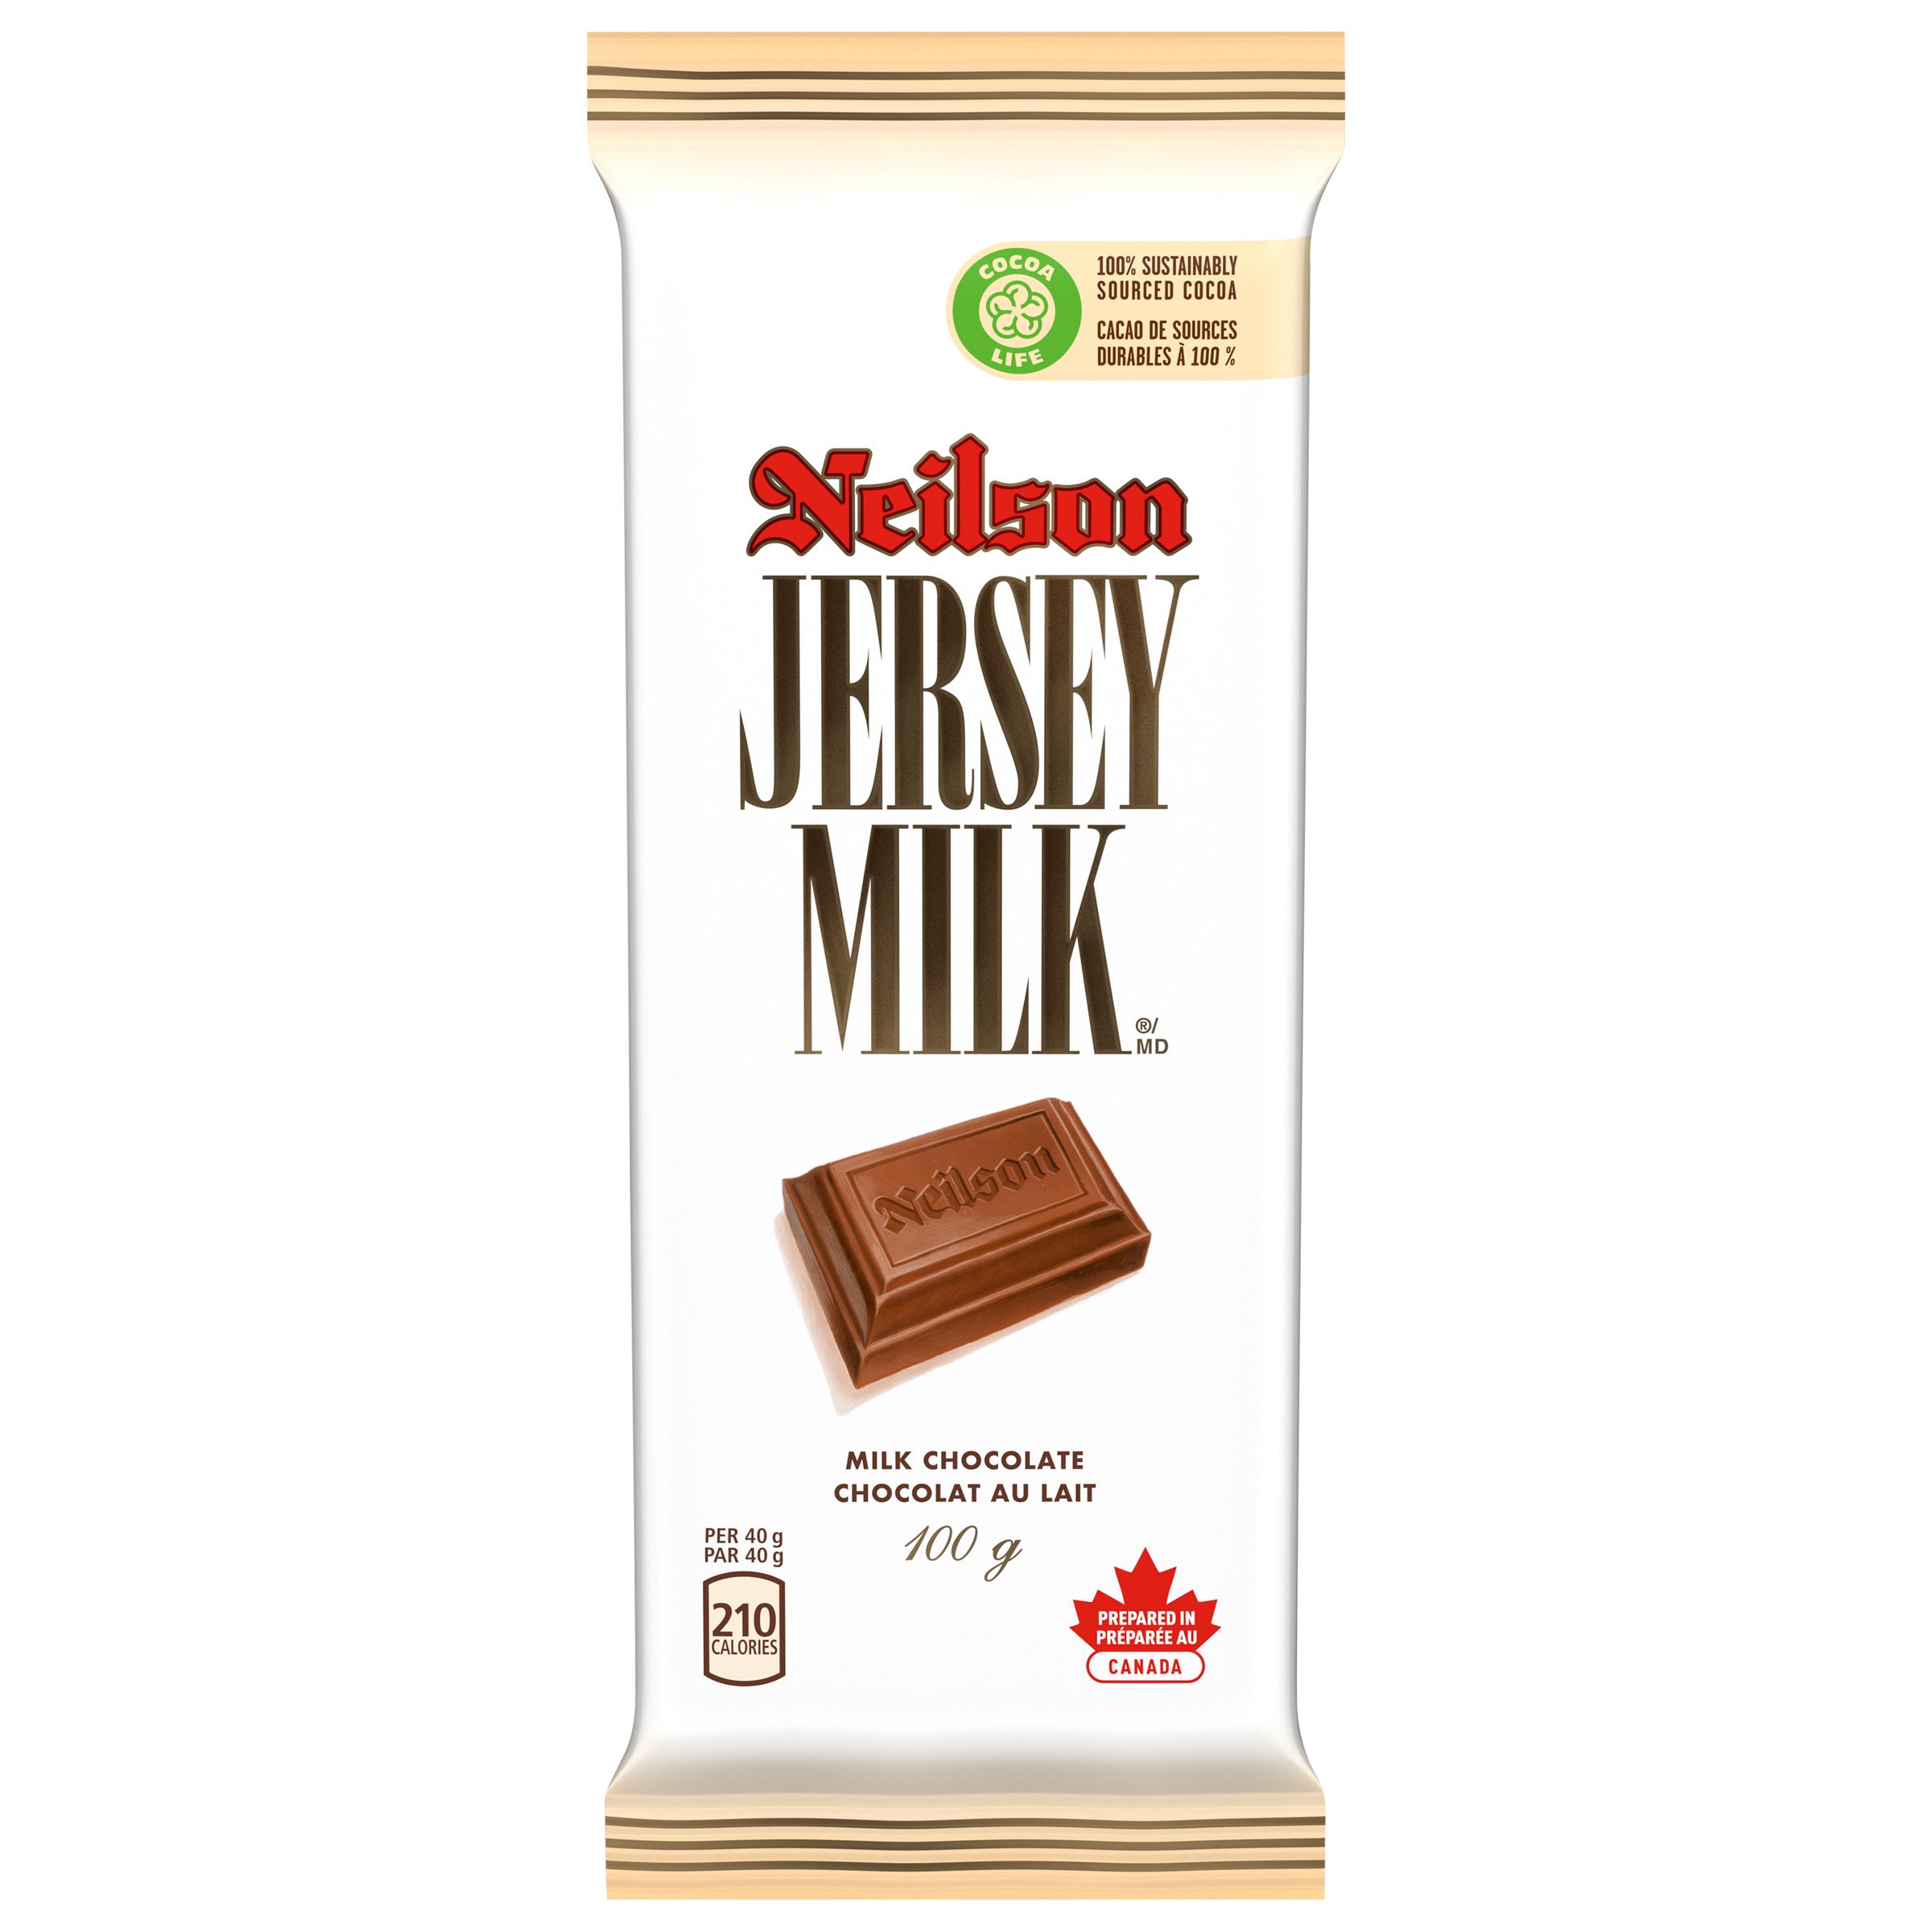 Nielson Jersey Milk, Milk Chocolate Bar, 100 G